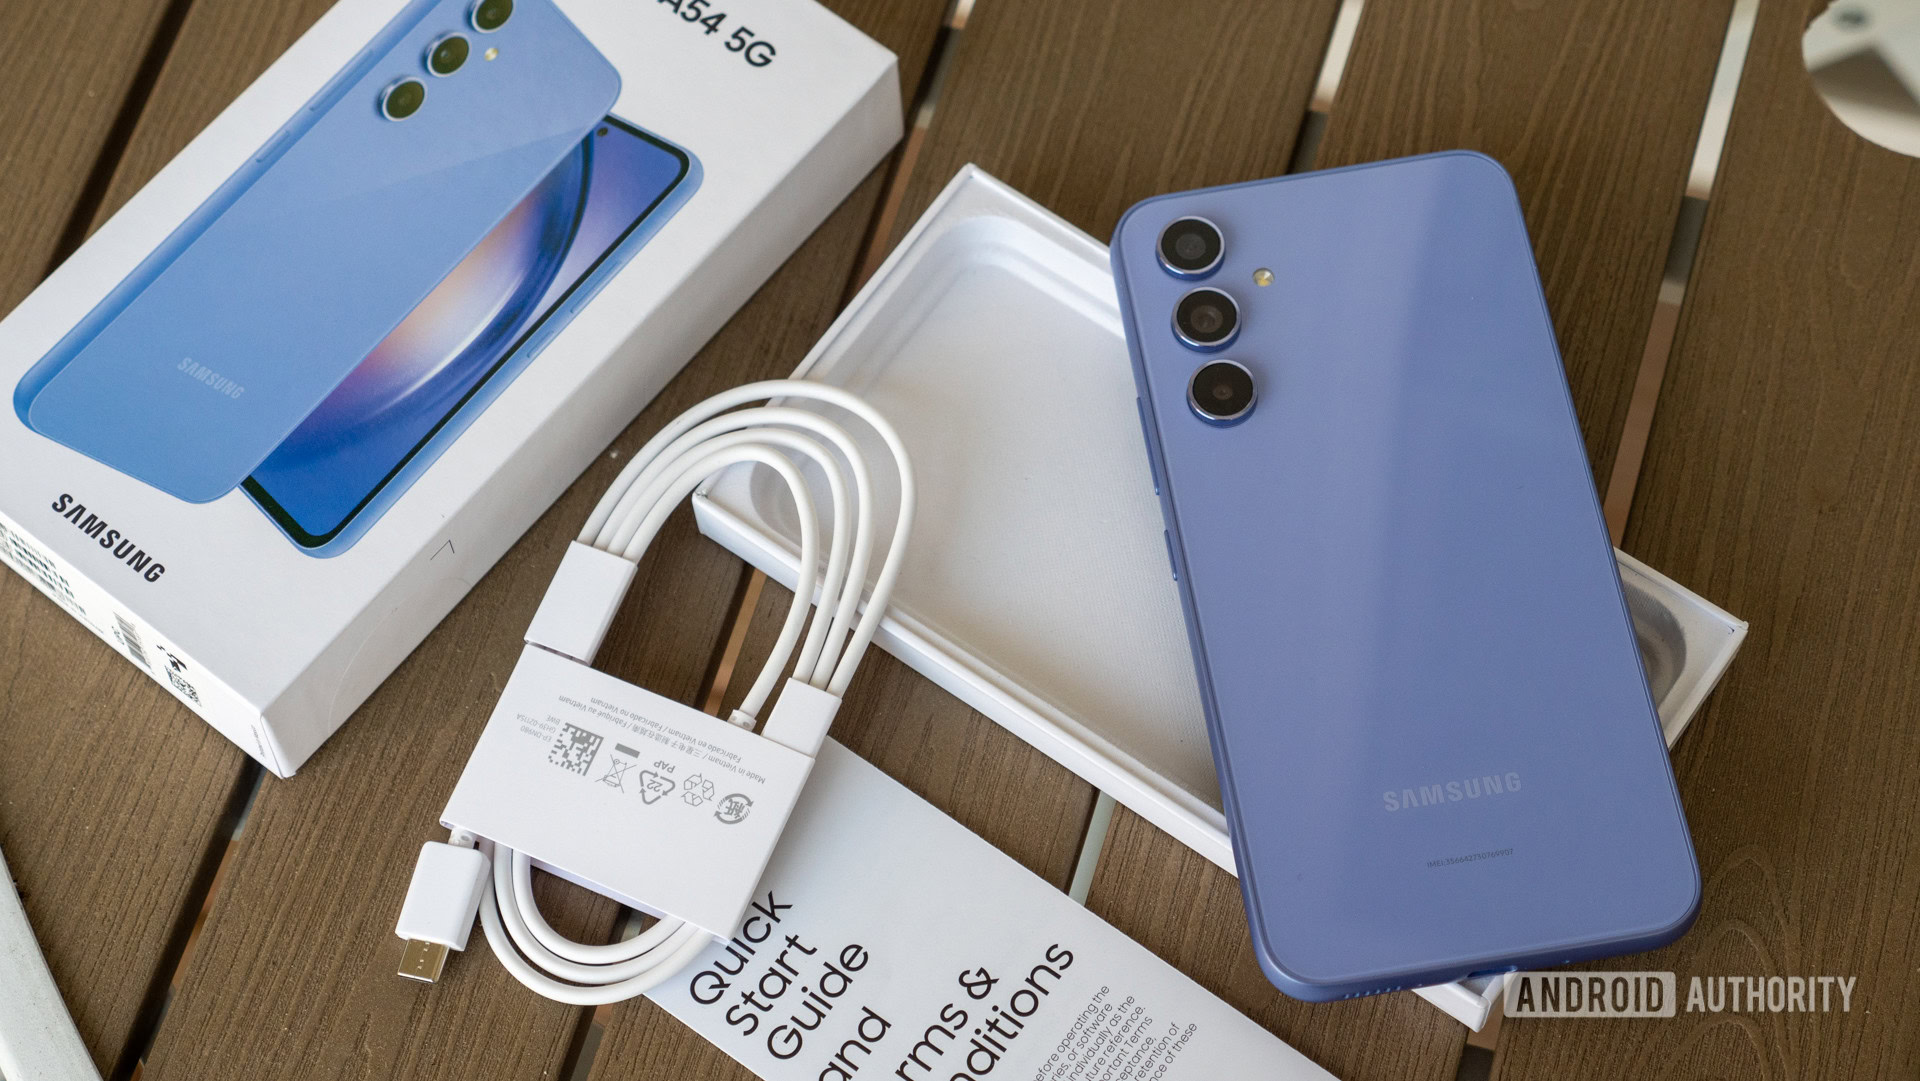 Samsung Galaxy A54 5G Review